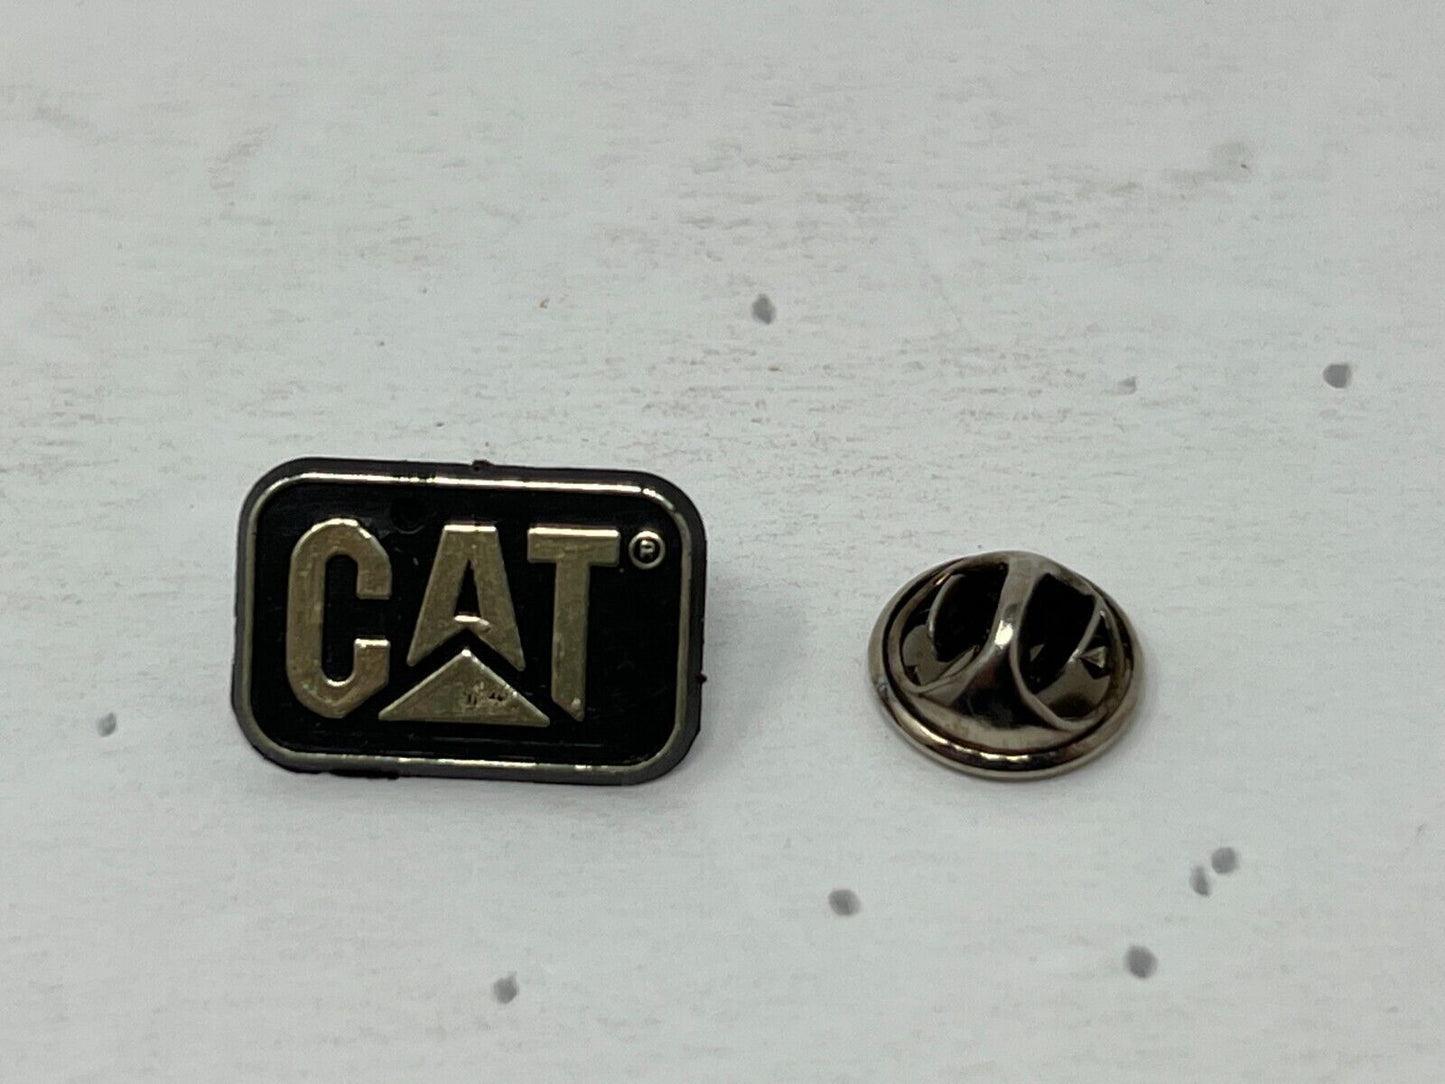 Cat Caterpillar Heavy Equipment Automotive Lapel Pin